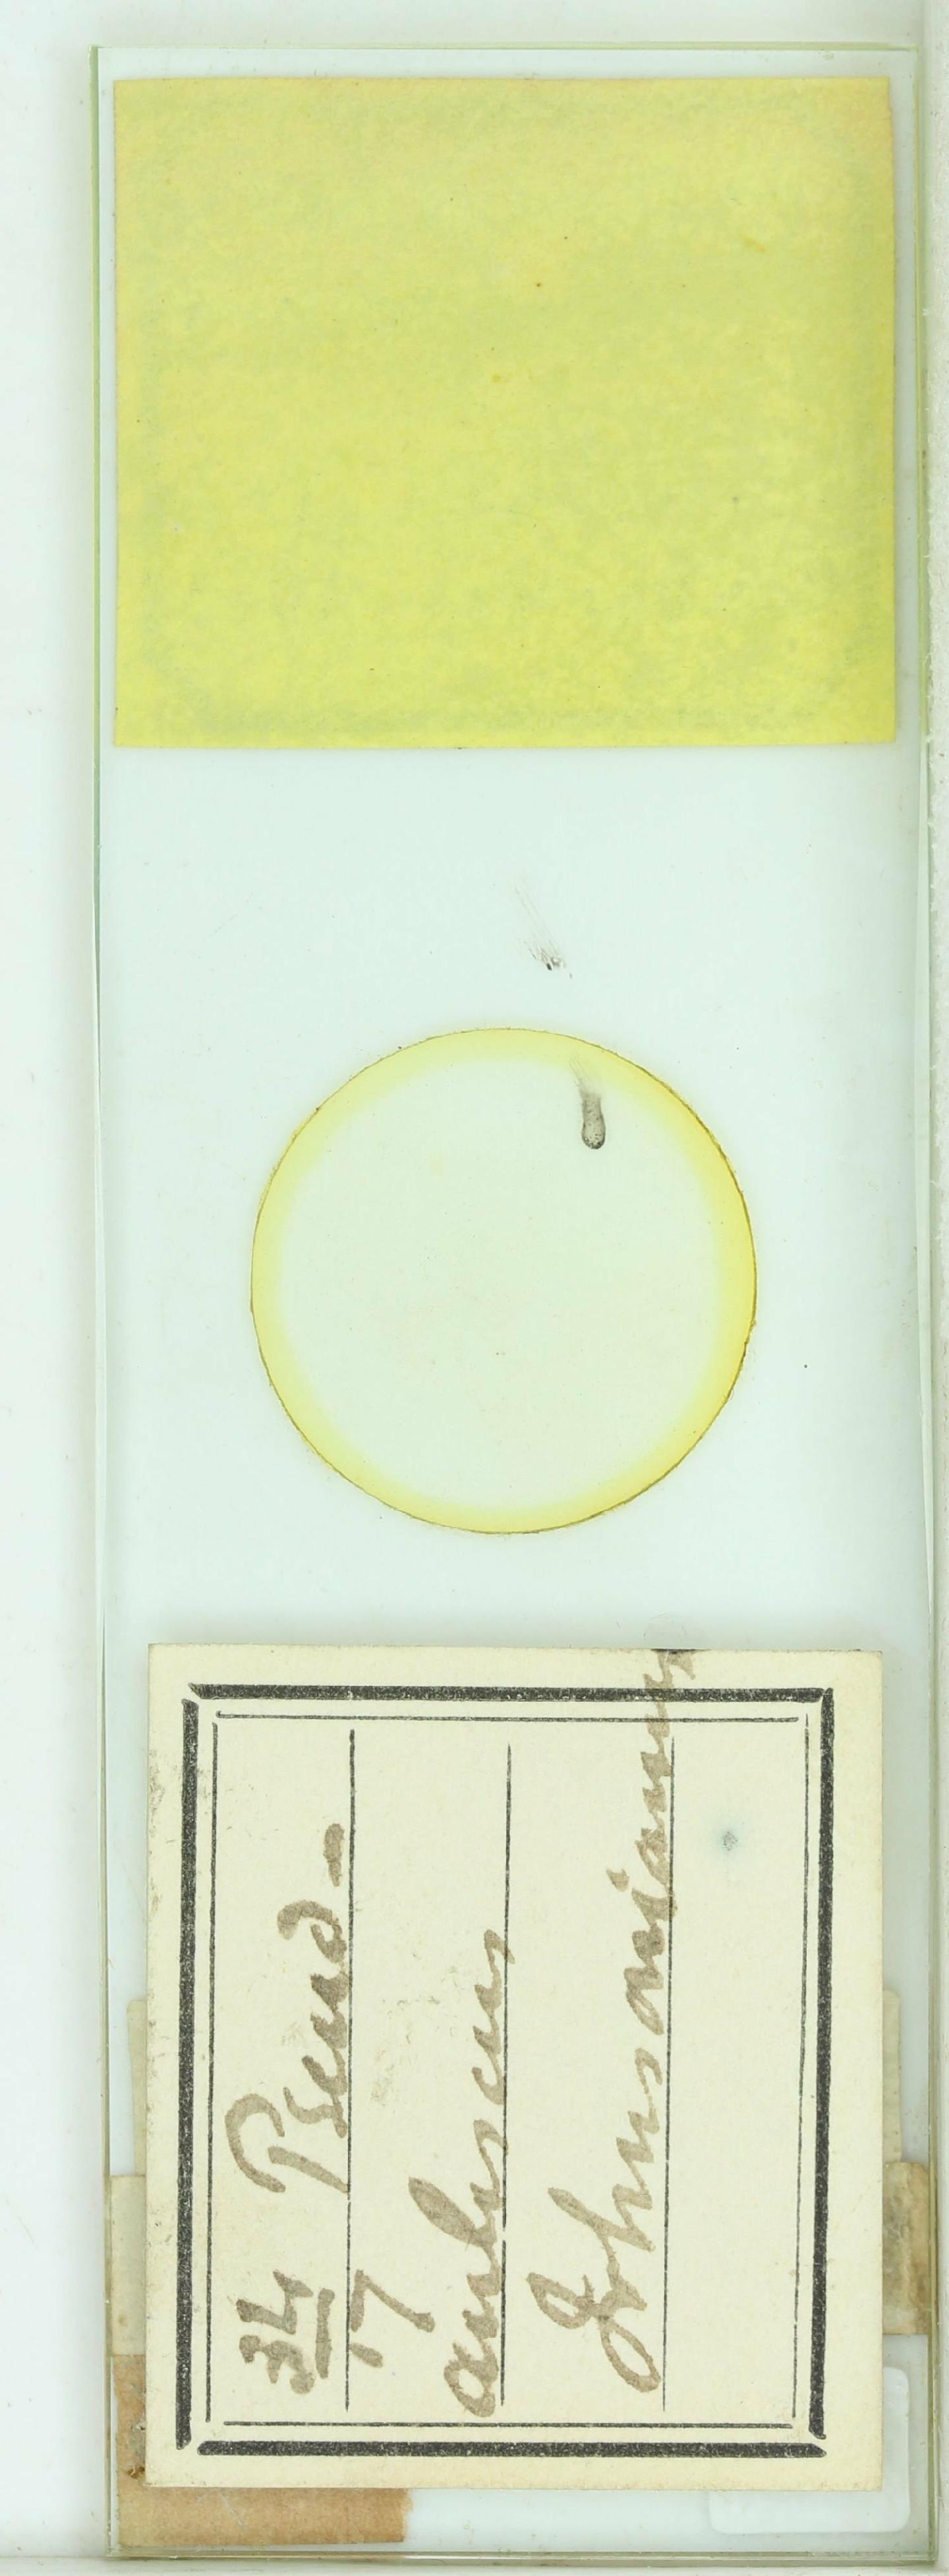 To NHMUK collection (Auliscus johnsonianus Grev.; Holotype; NHMUK:ecatalogue:4739410)